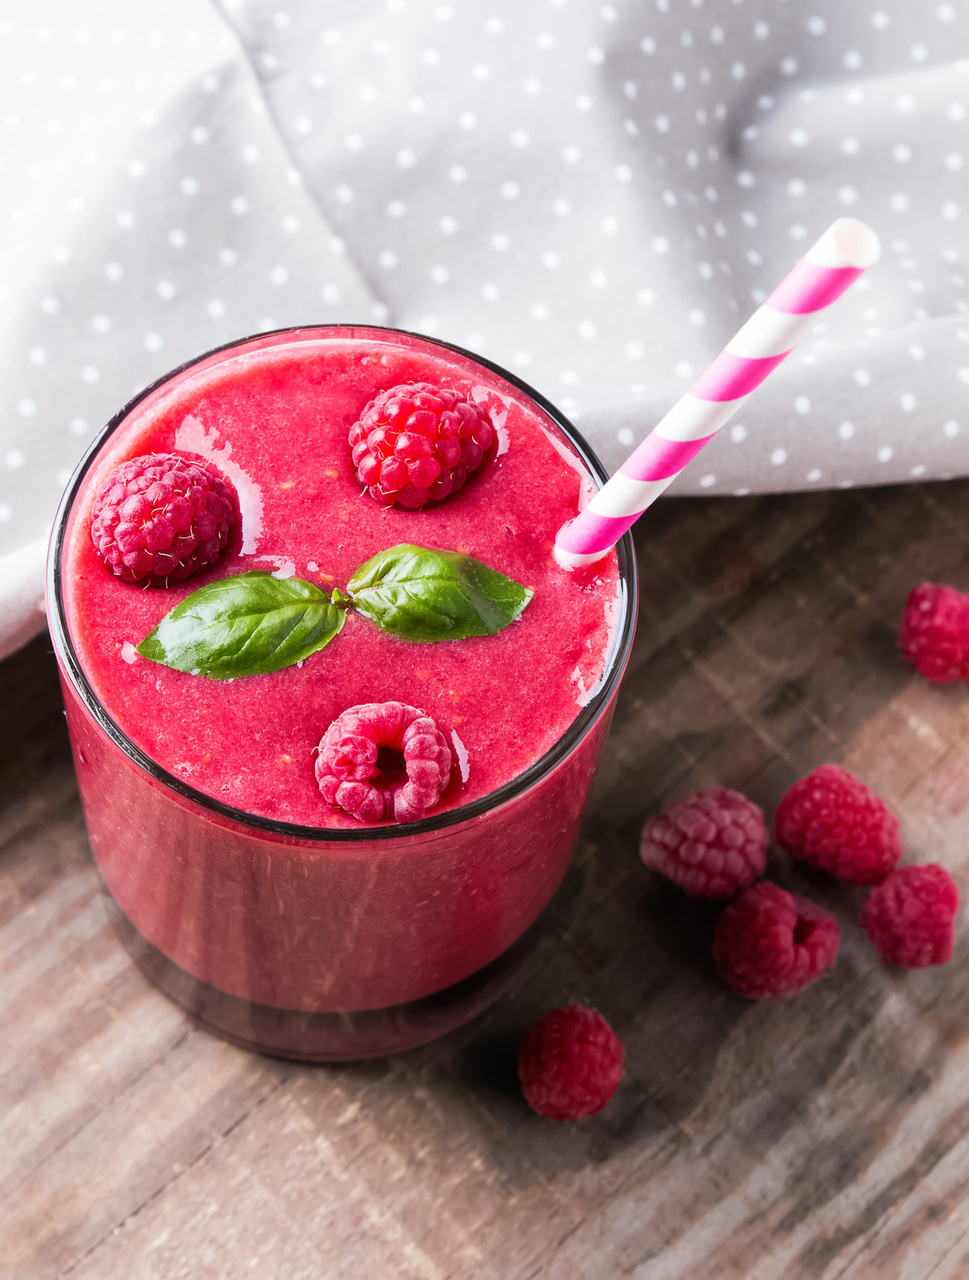 Spring Garden Party Recipes: Healthy Mixed Berry Smoothie